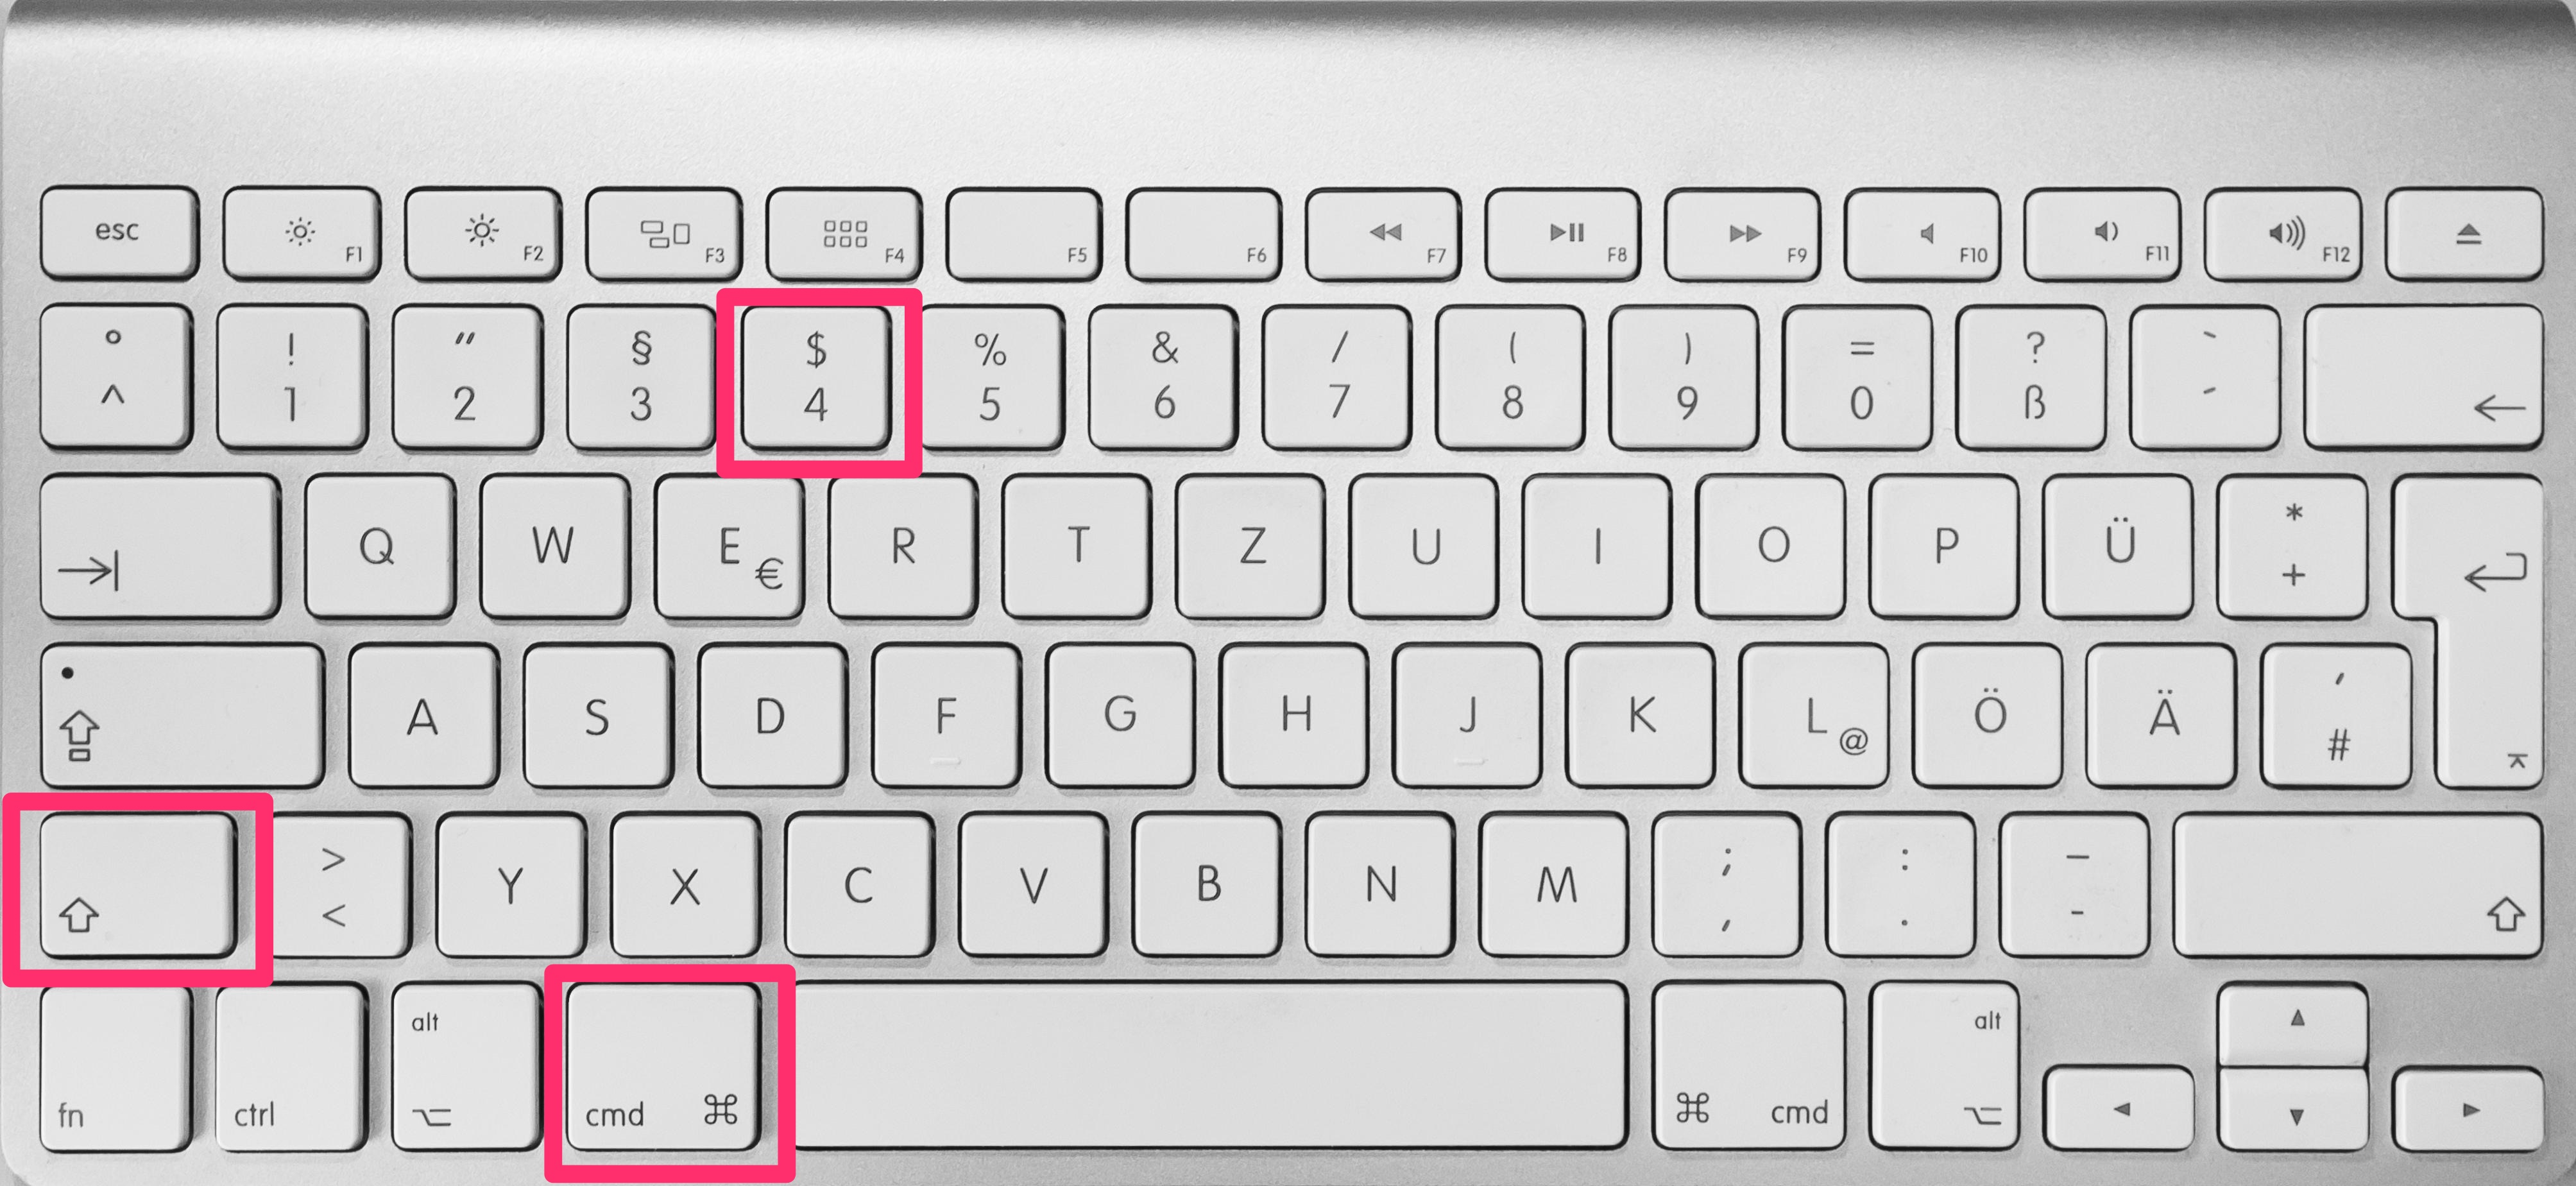 kayboard shortcuts for screenshot on mac